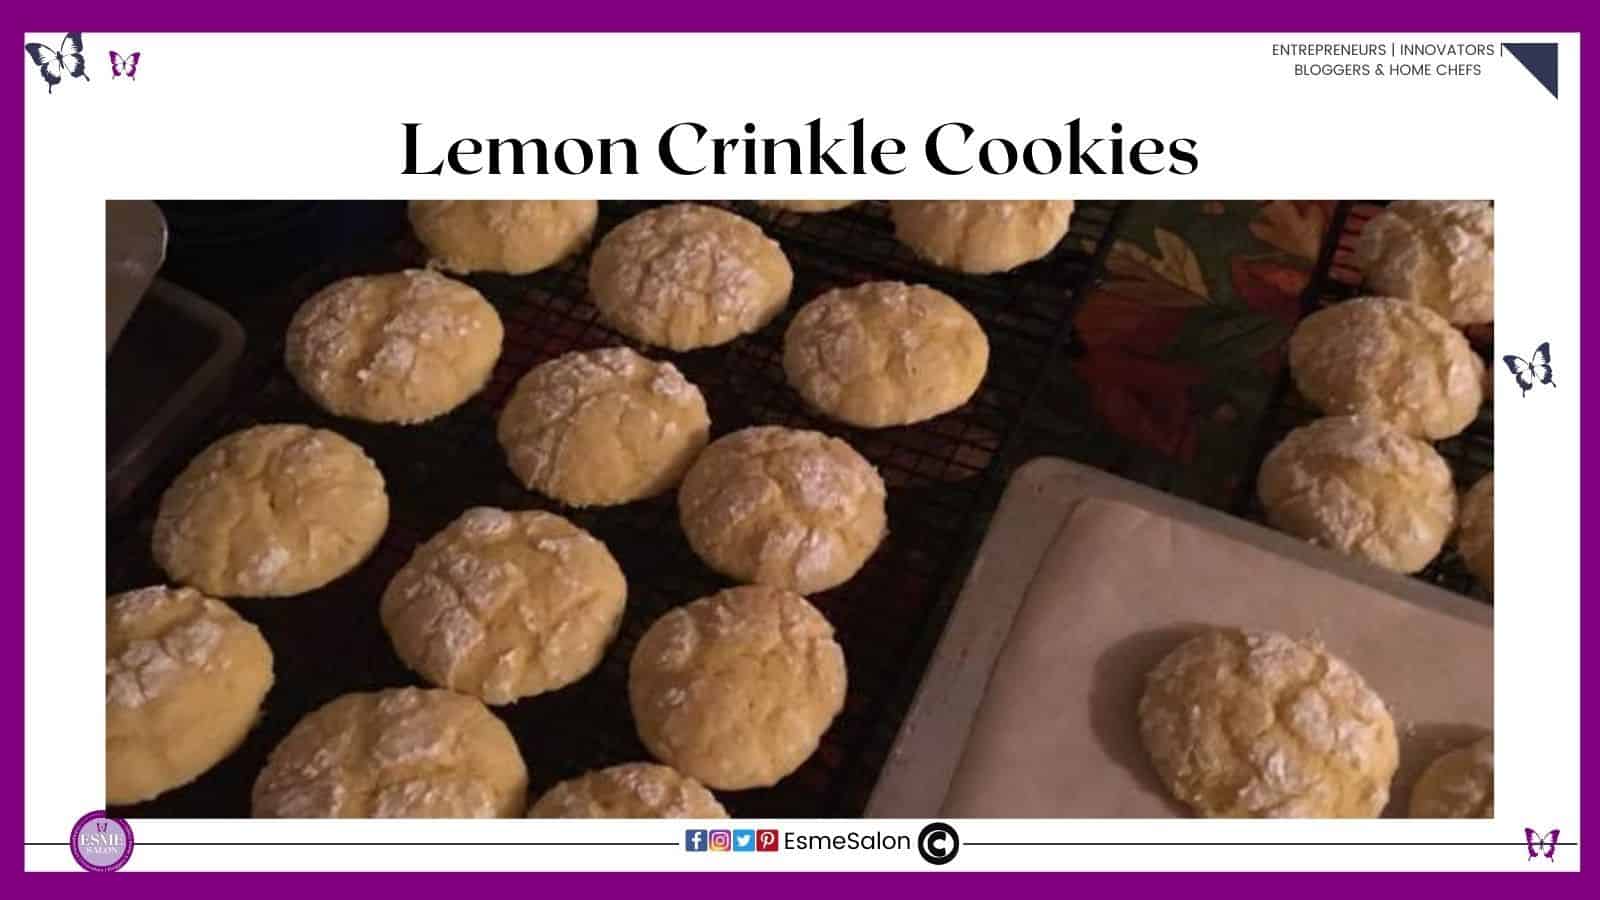 an image of bakedf Lemon Crinkle Cookies dusted with sugar